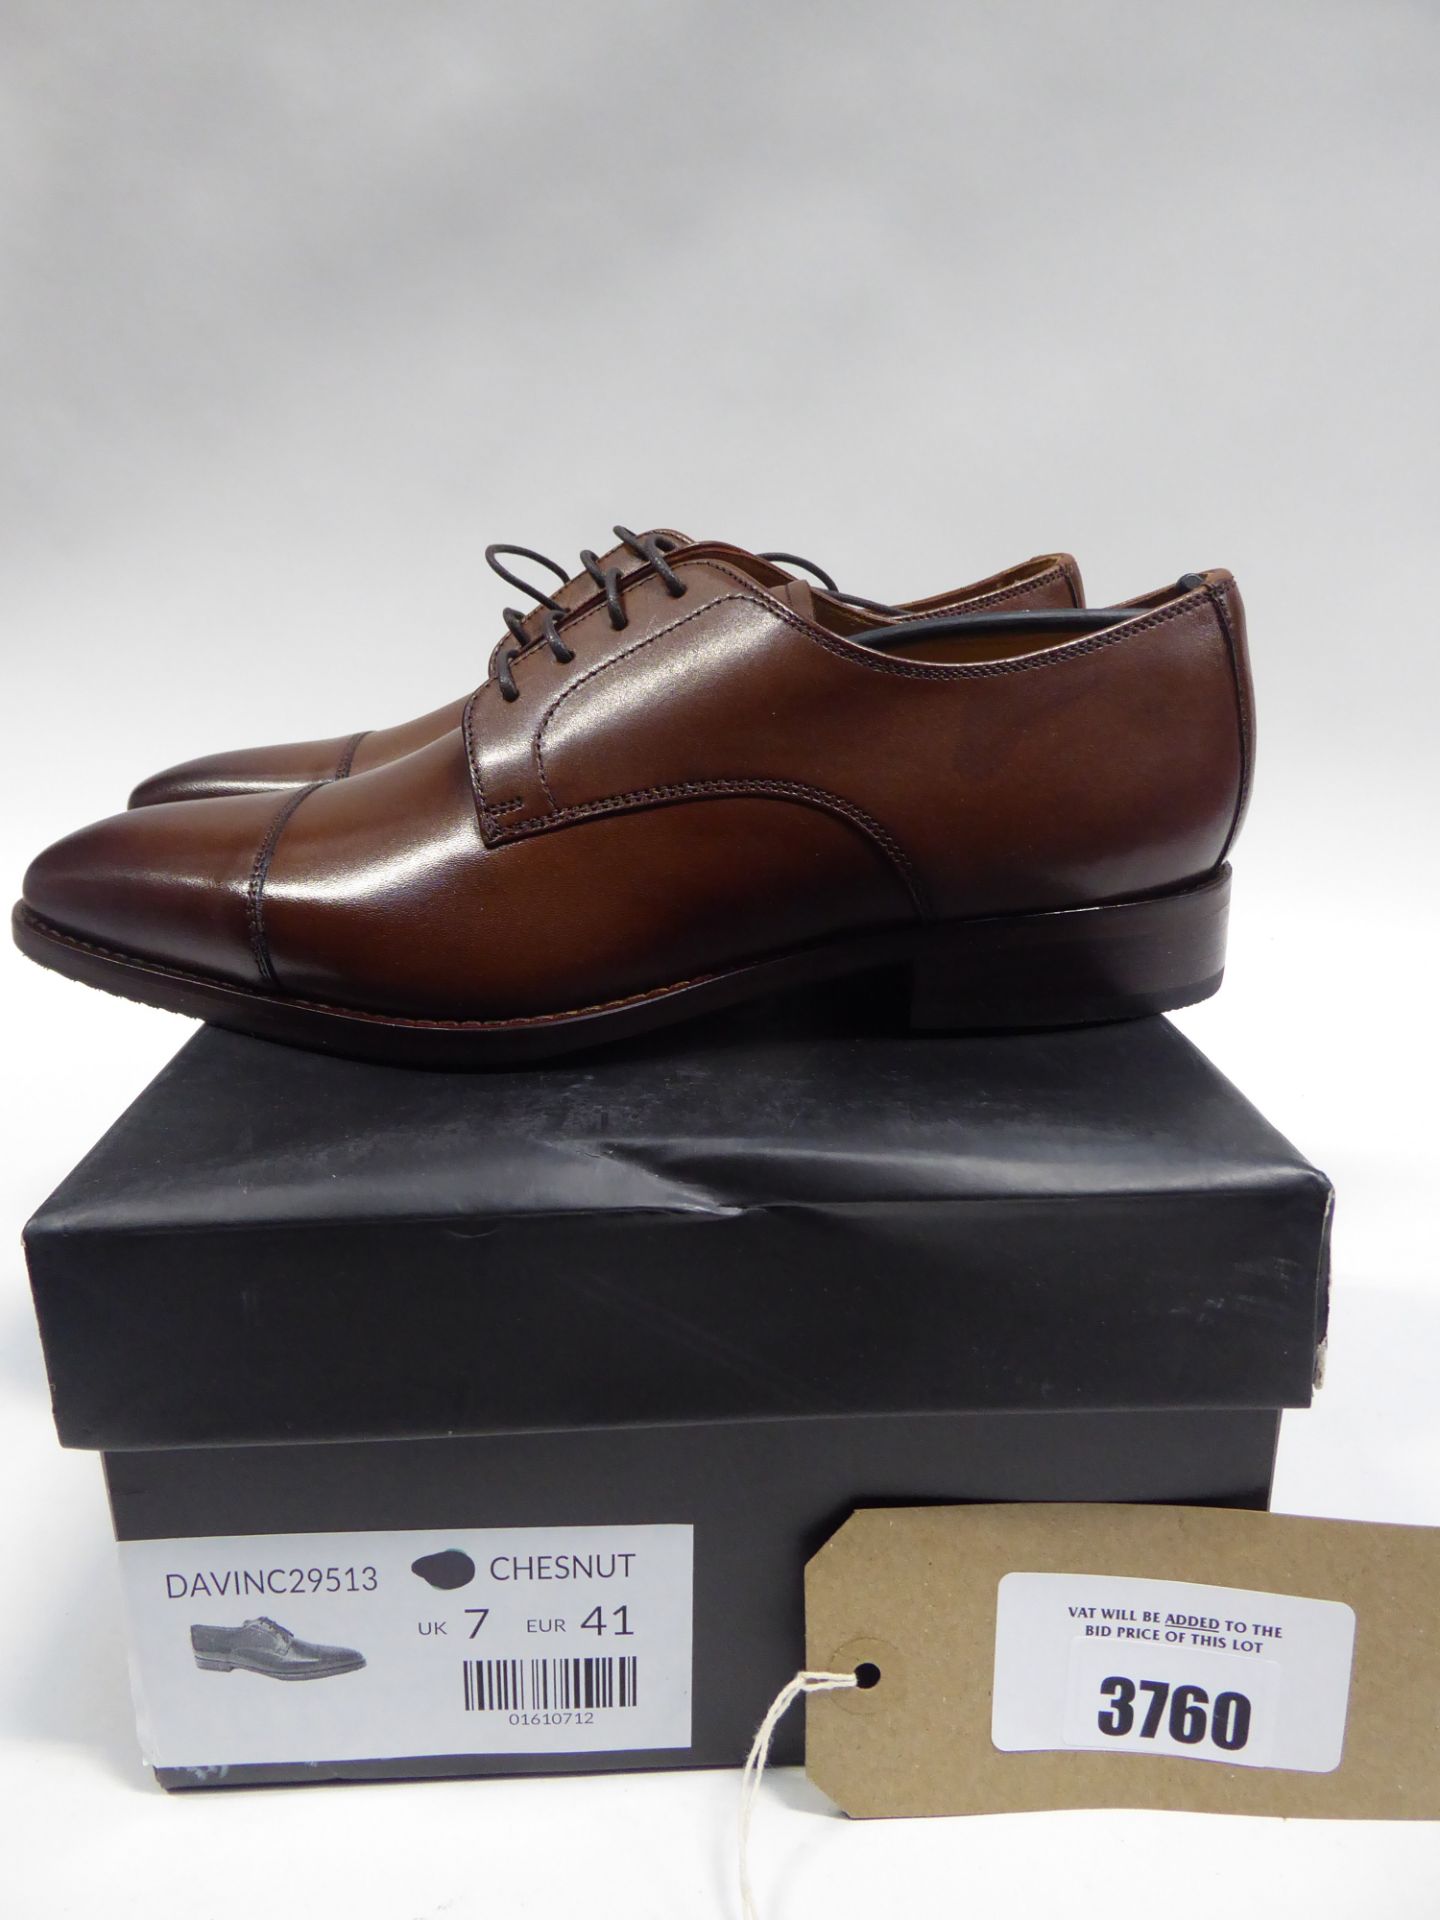 Jones Bootmaker Matthew Leather Oxford shoes size 7